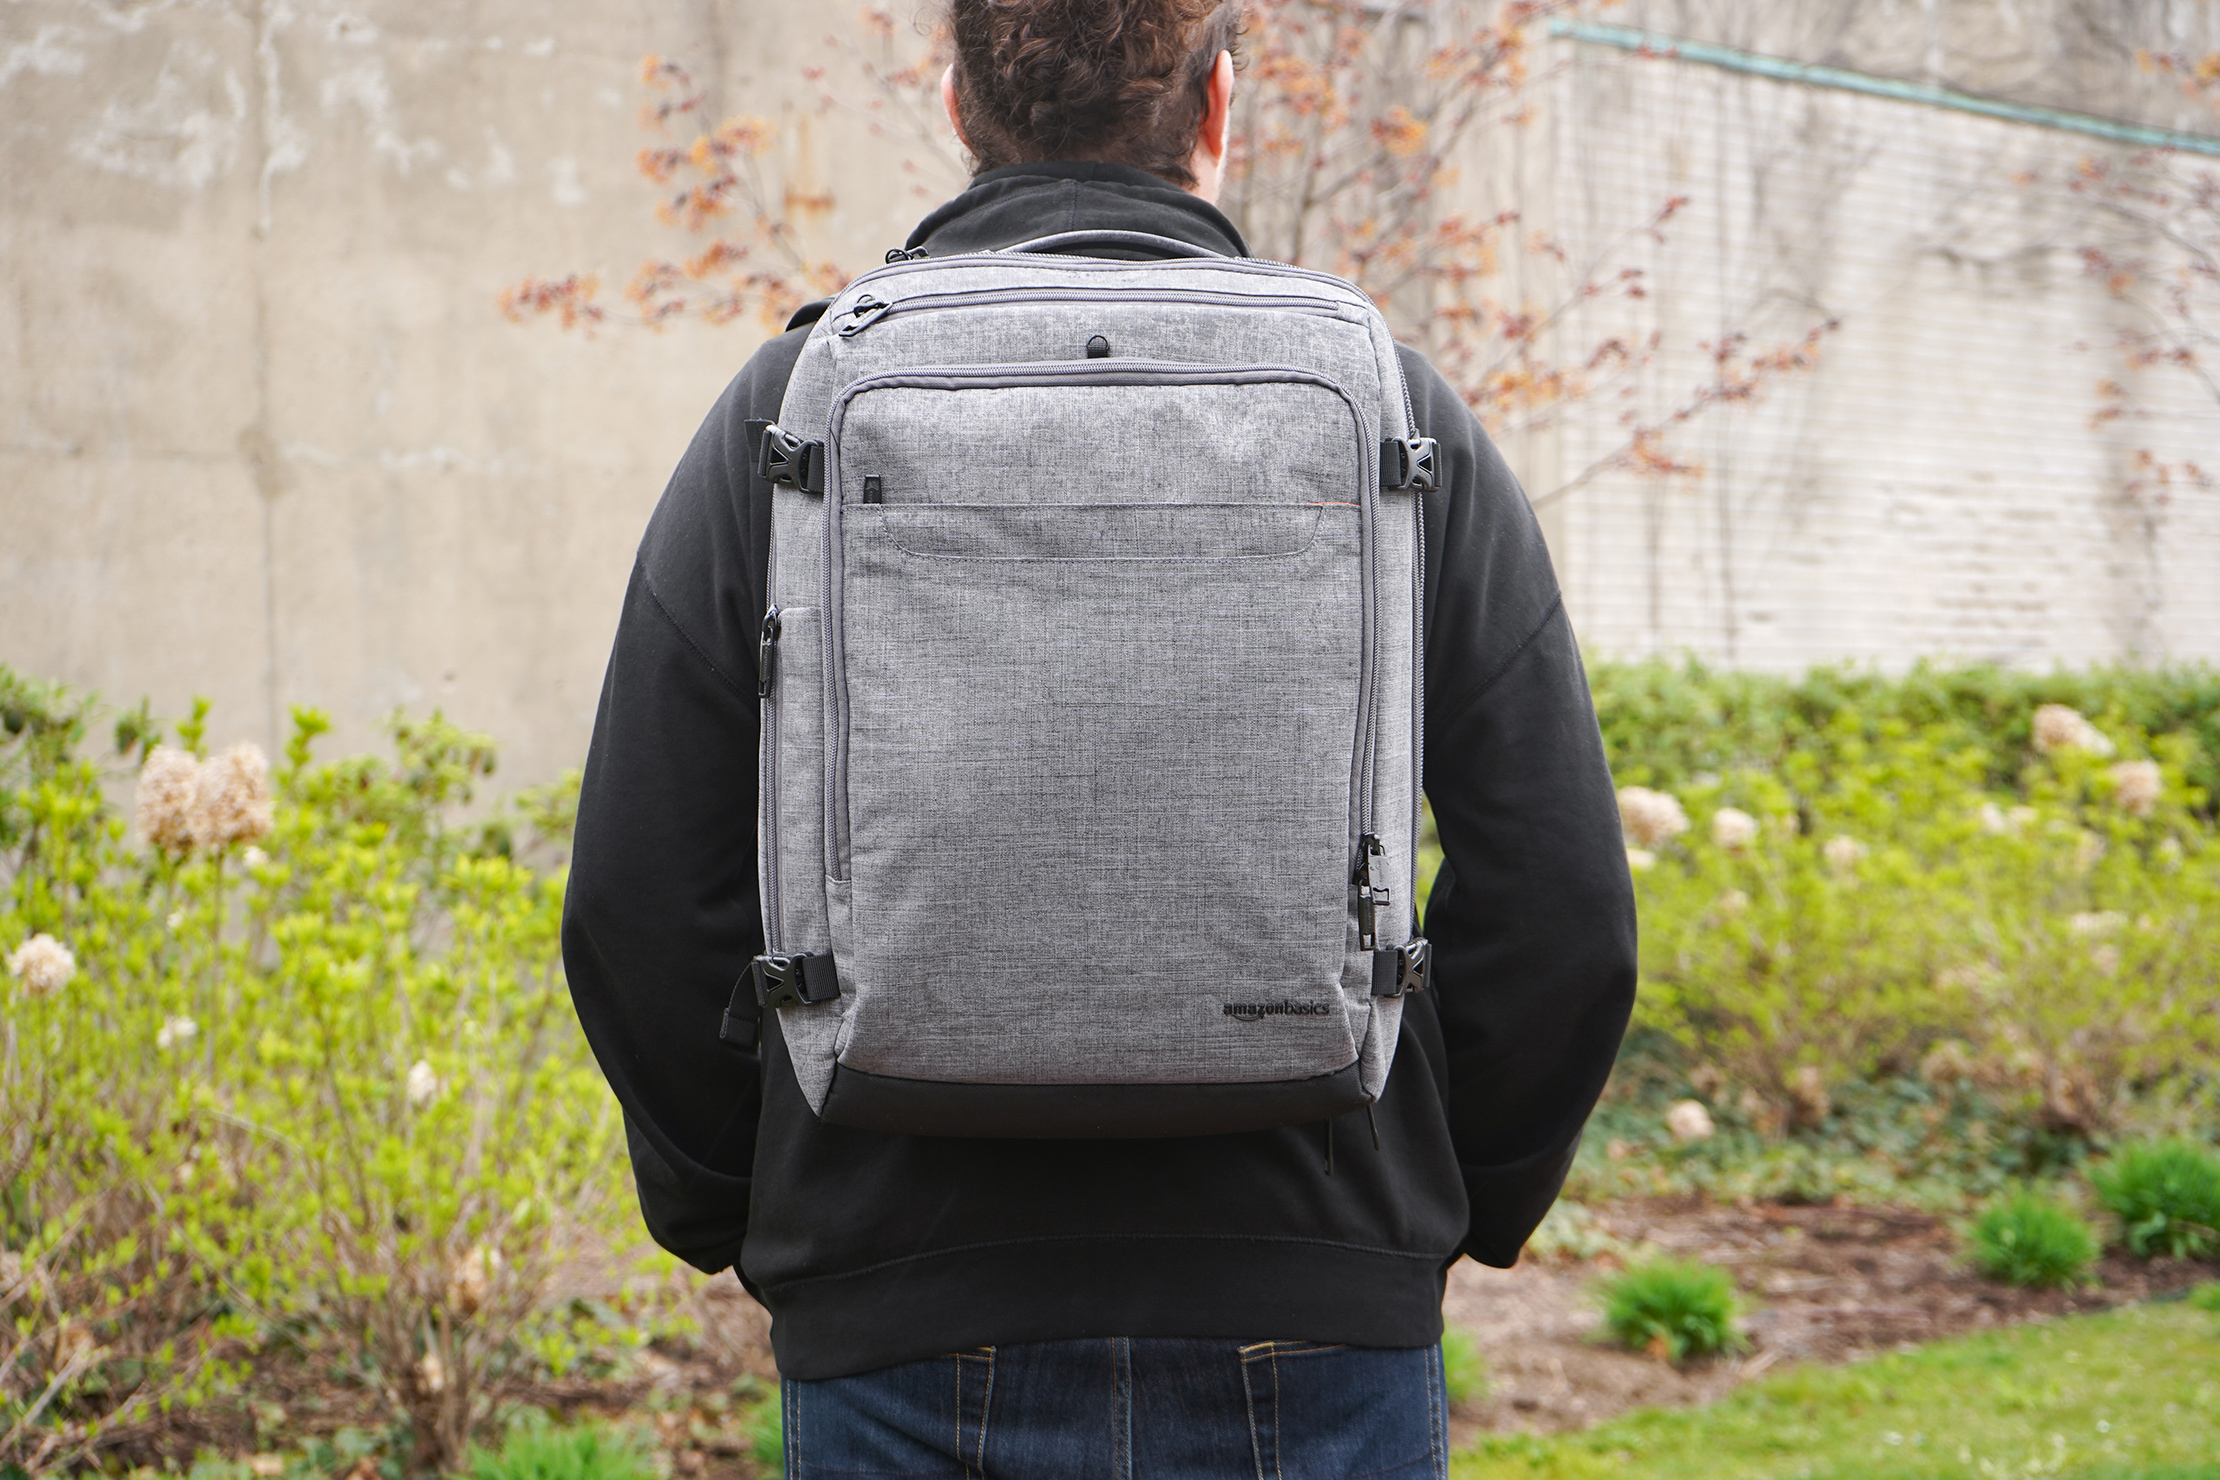 AmazonBasics Slim Travel Backpack Weekender Review Pack